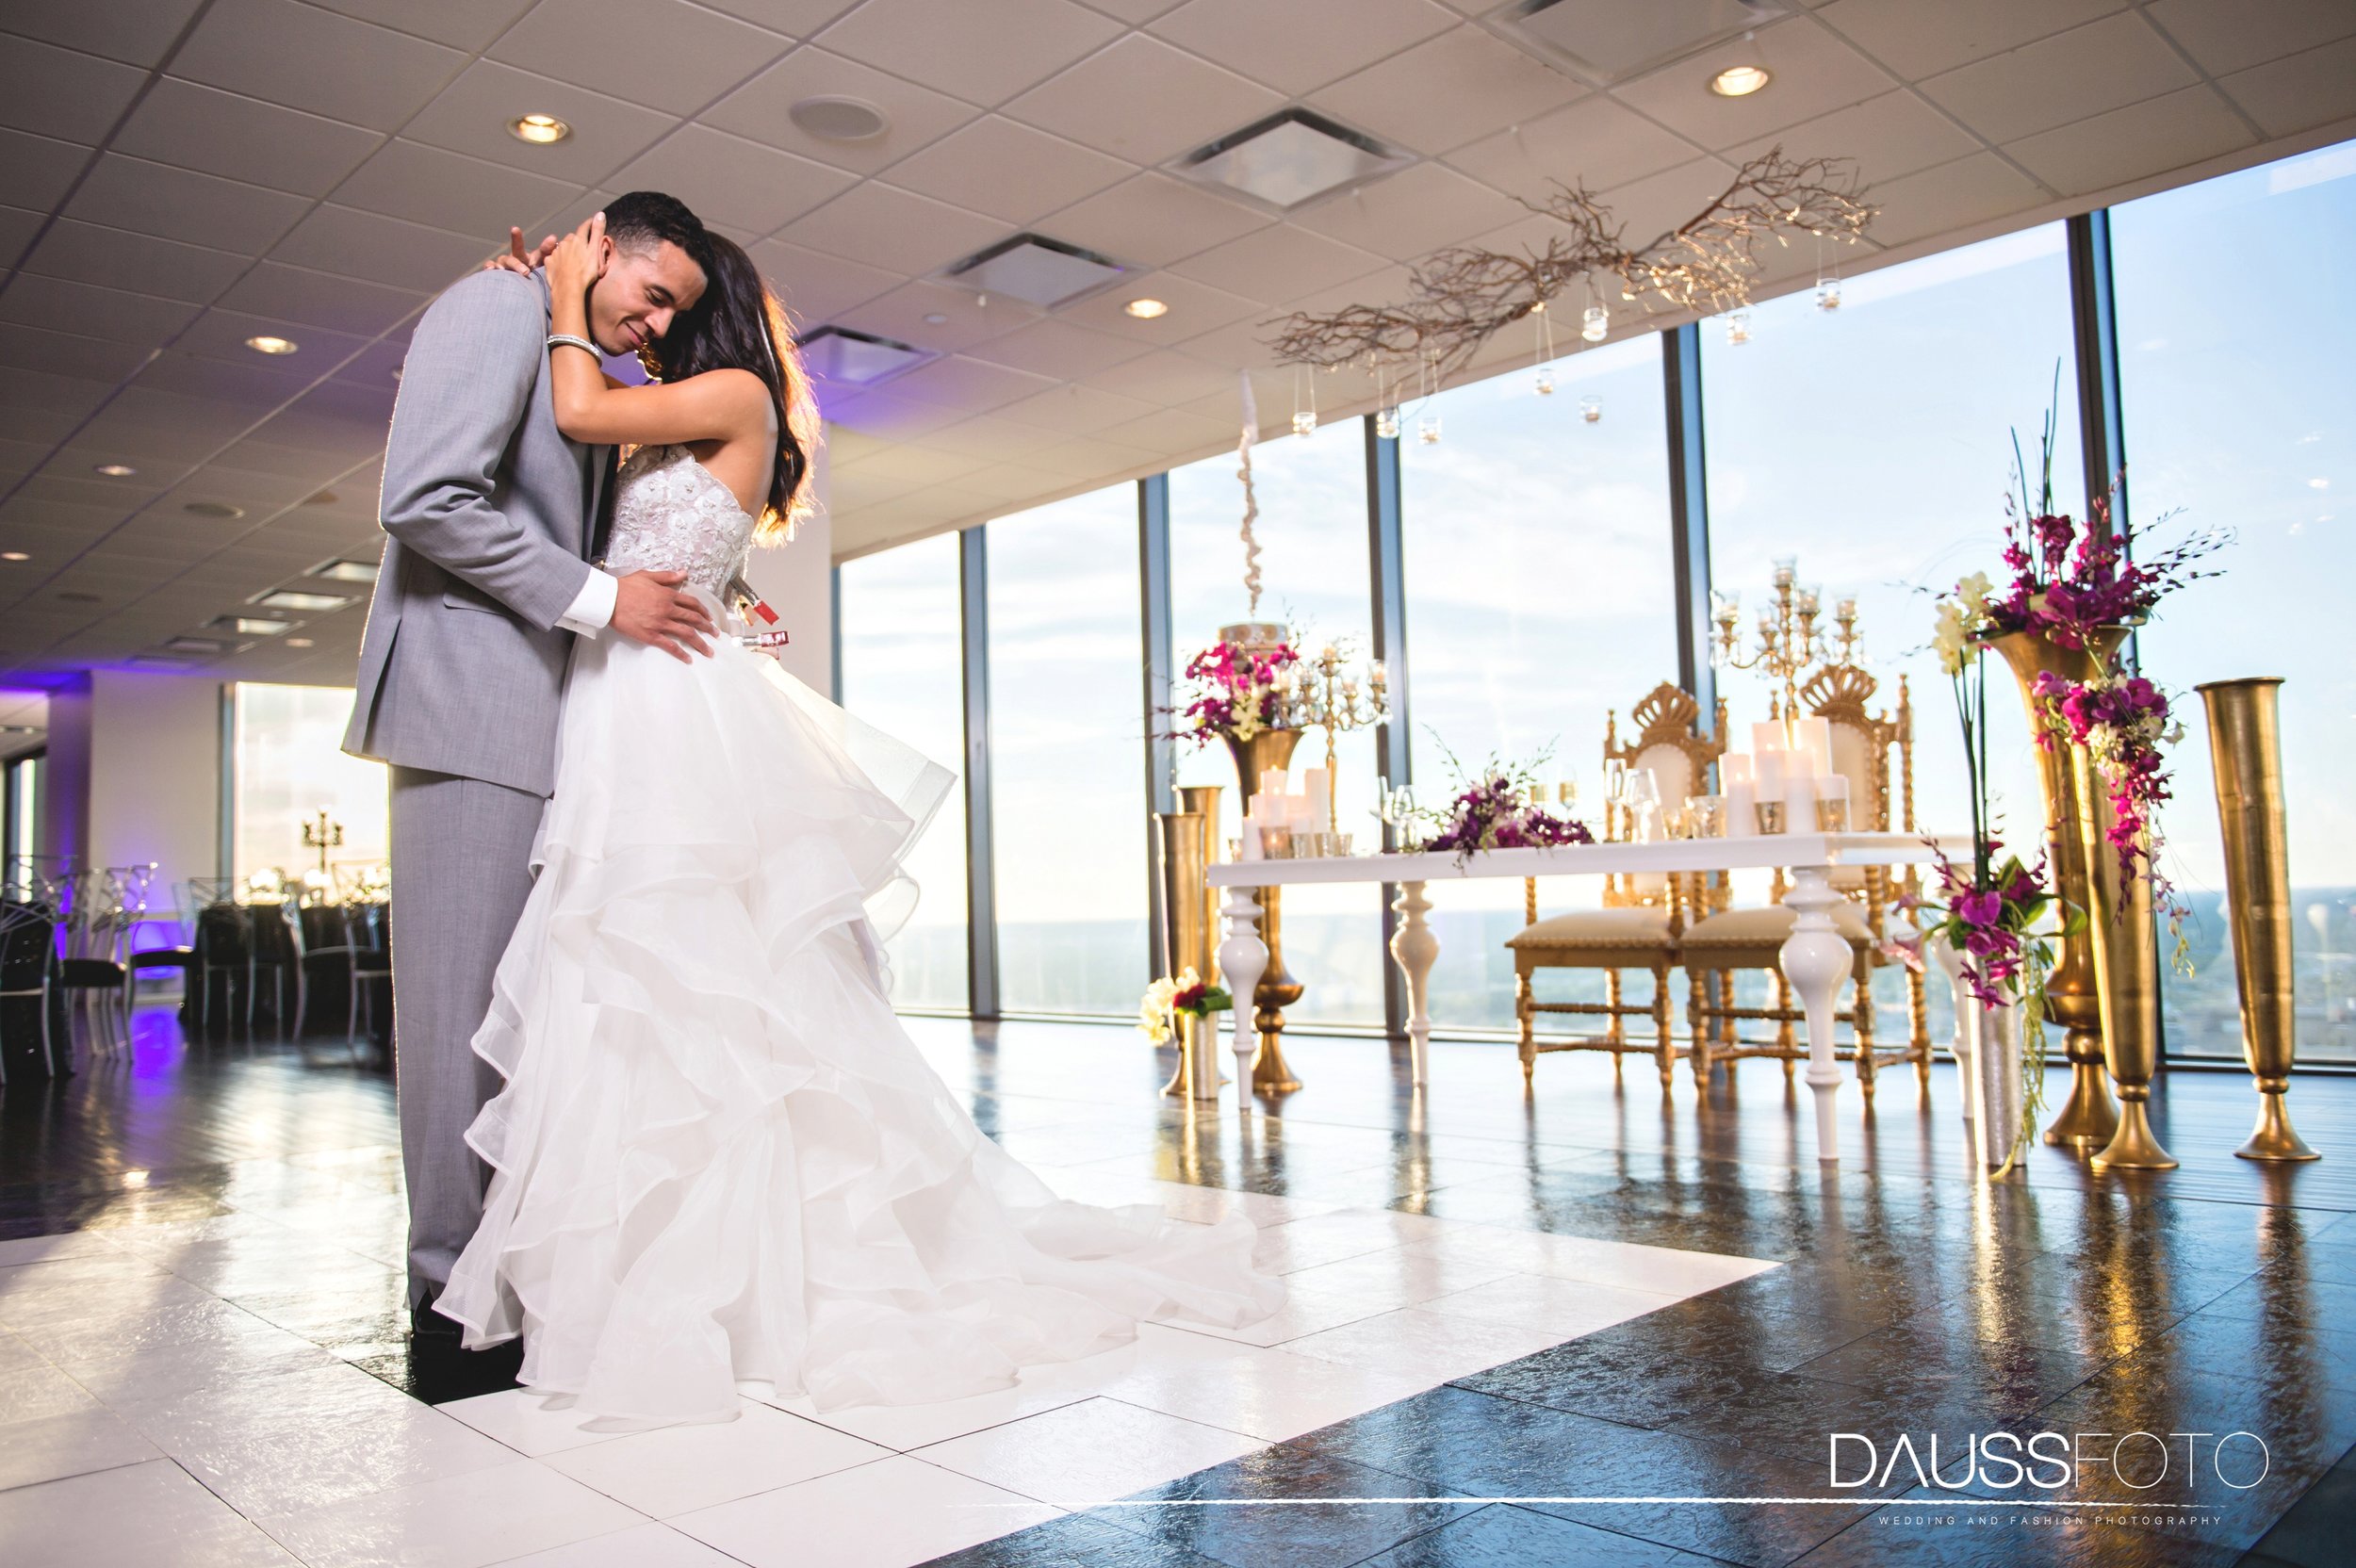 DaussFOTO_20150721_117_Indiana Wedding Photographer.jpg